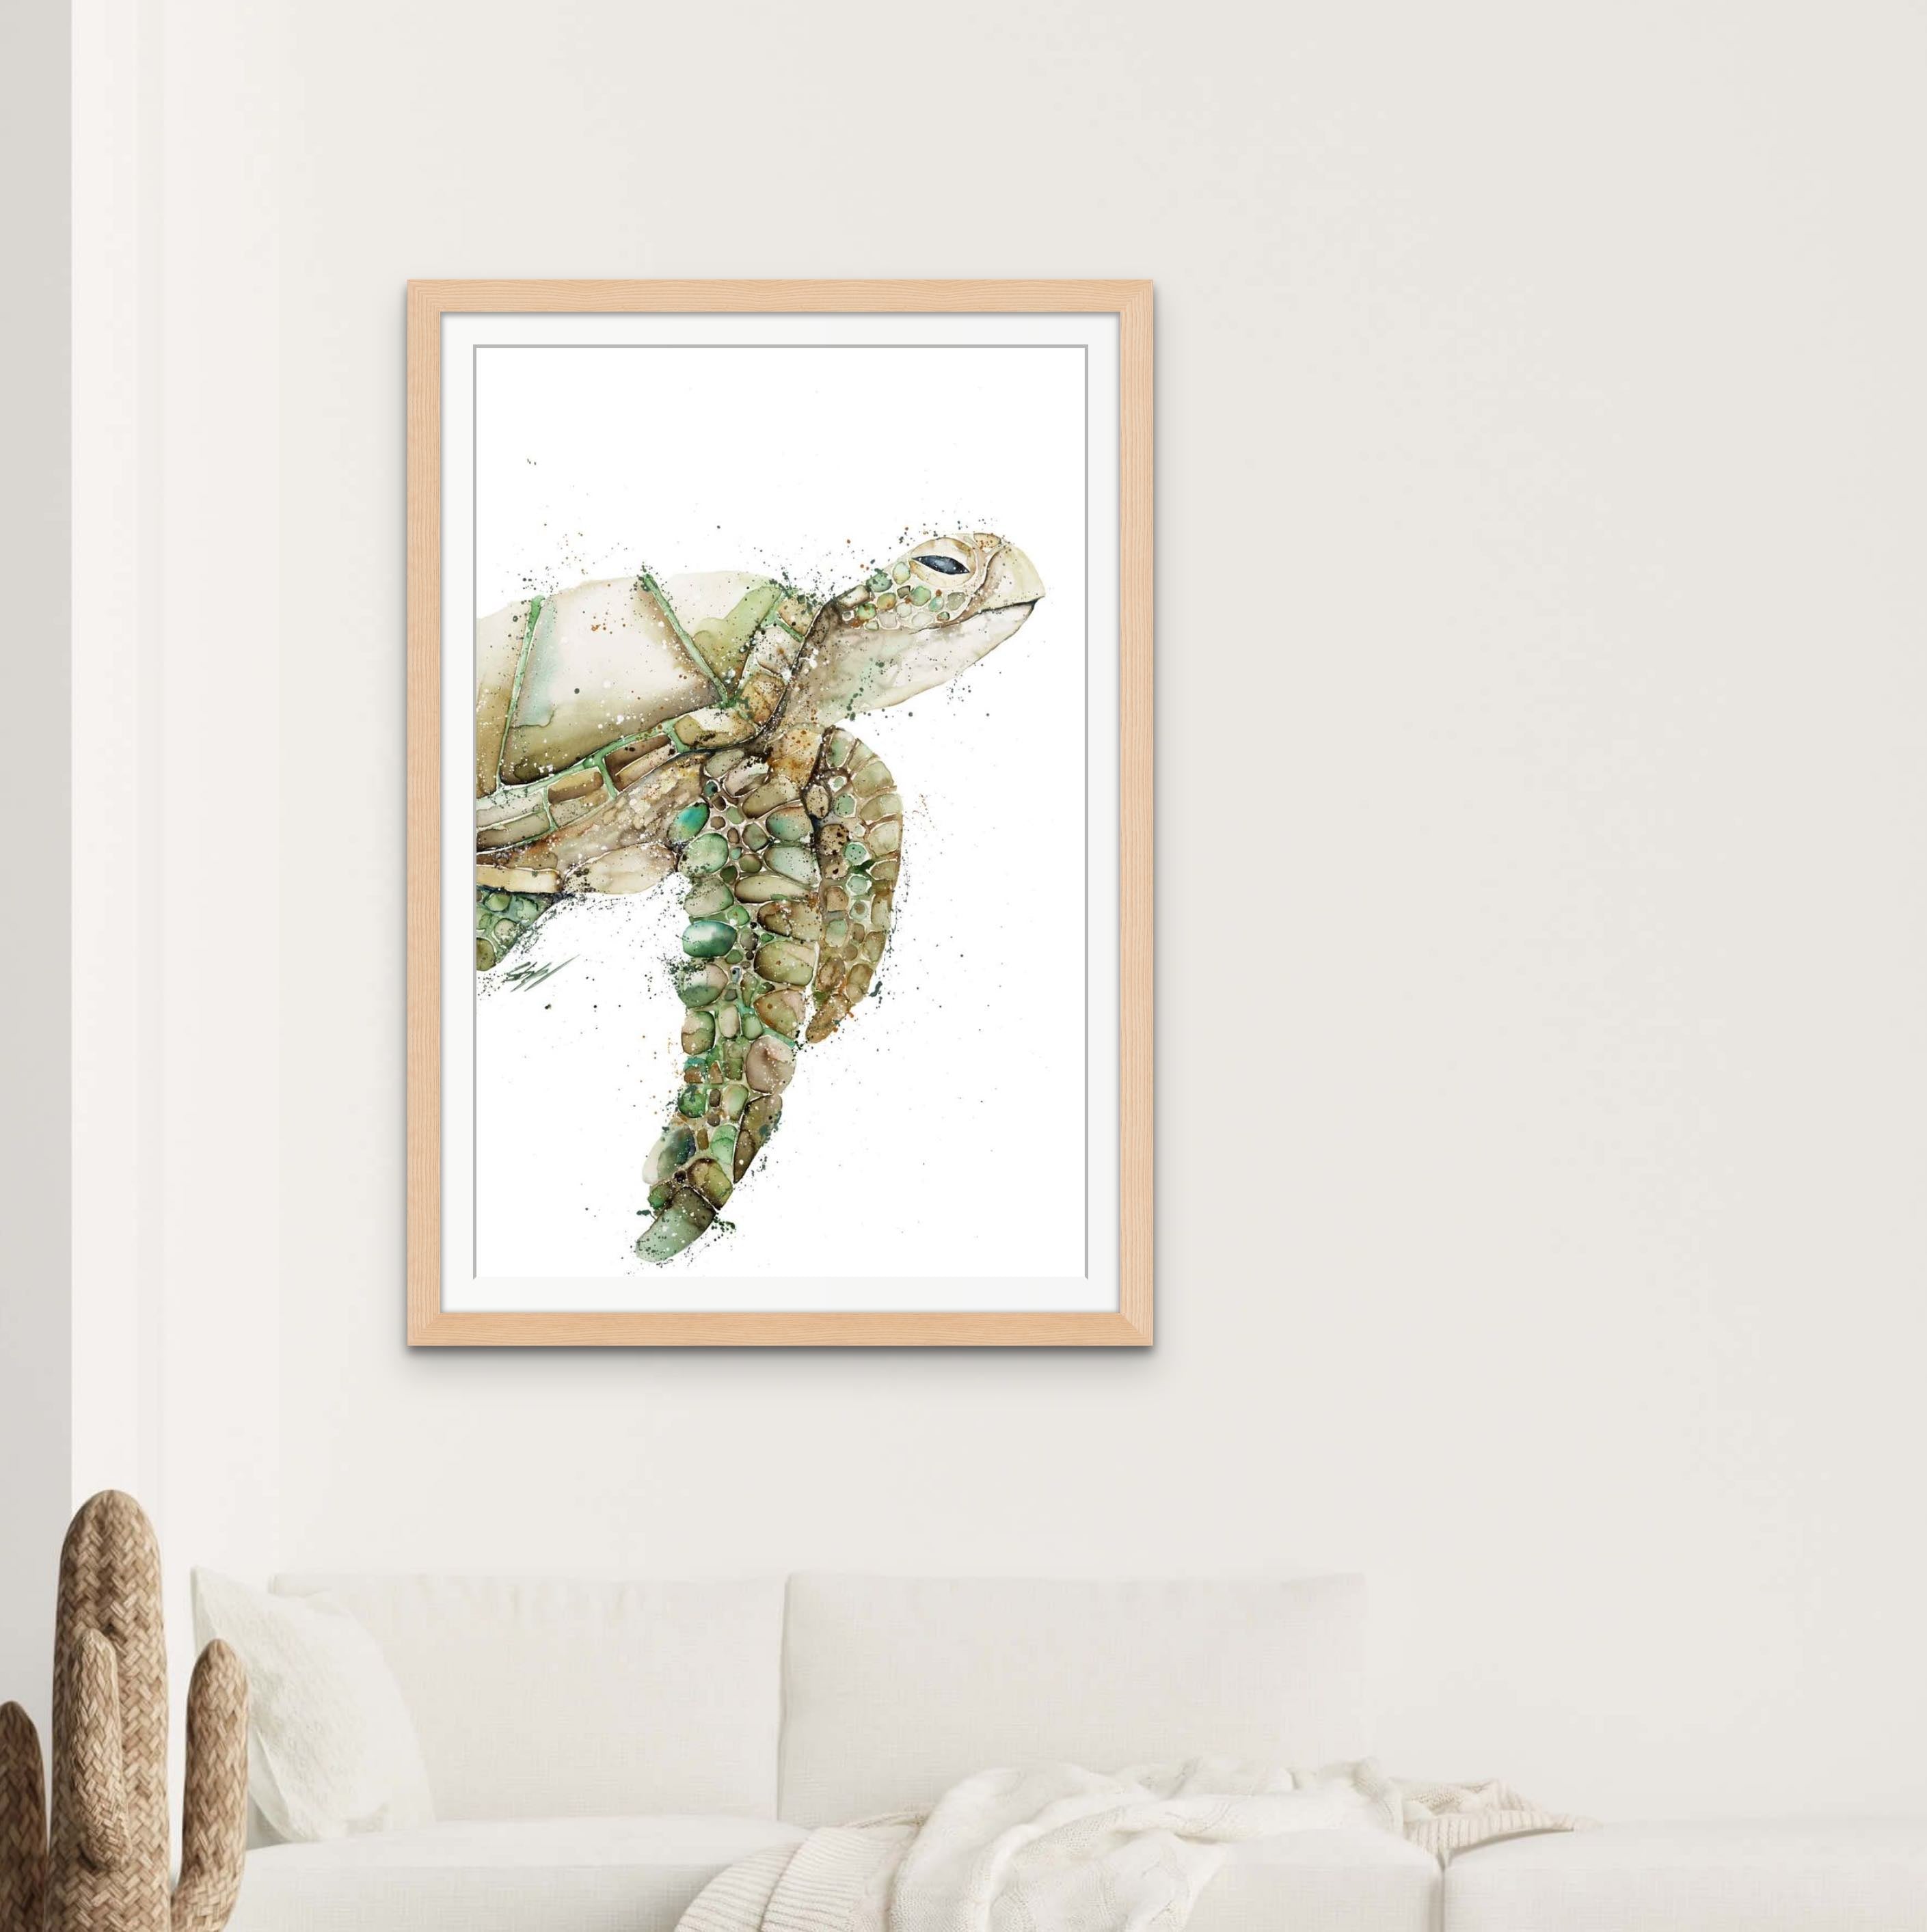 moss-green-sea-turtle-portrait-framed-paper-print